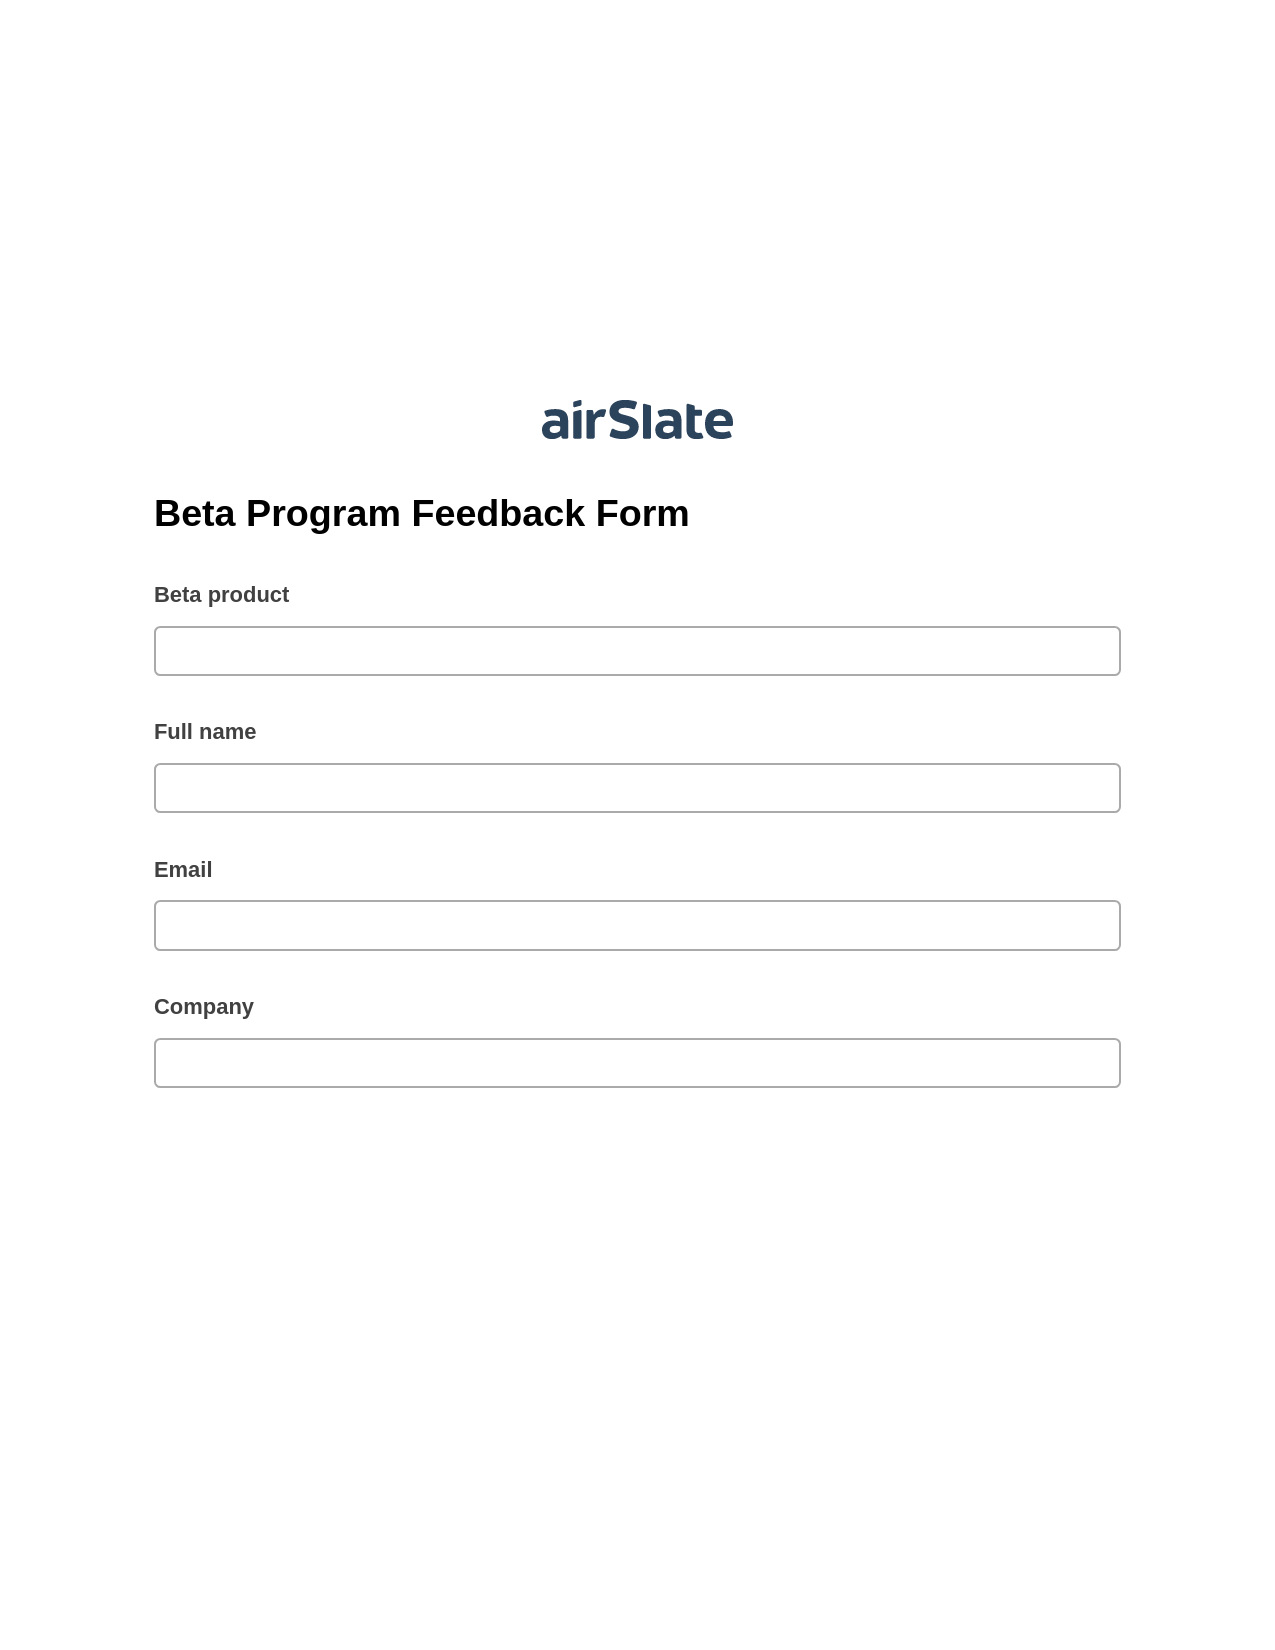 Multirole Beta Program Feedback Form Pre-fill from Salesforce Record Bot, Send a Slate to Salesforce Contact Bot, Dropbox Bot